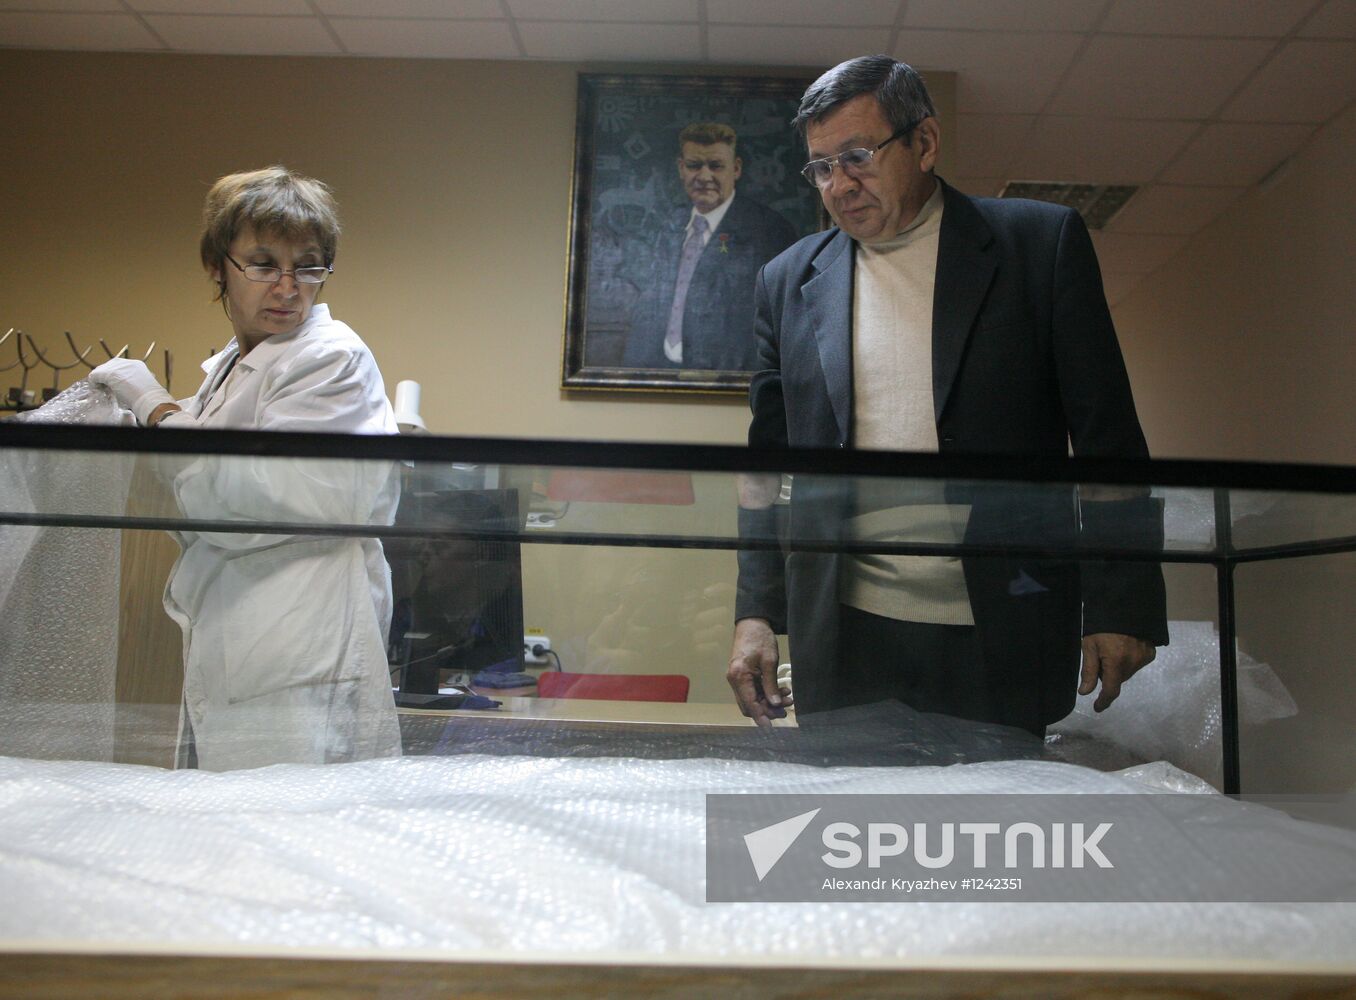 Princess Ukoka's mummy shipped back to Altai